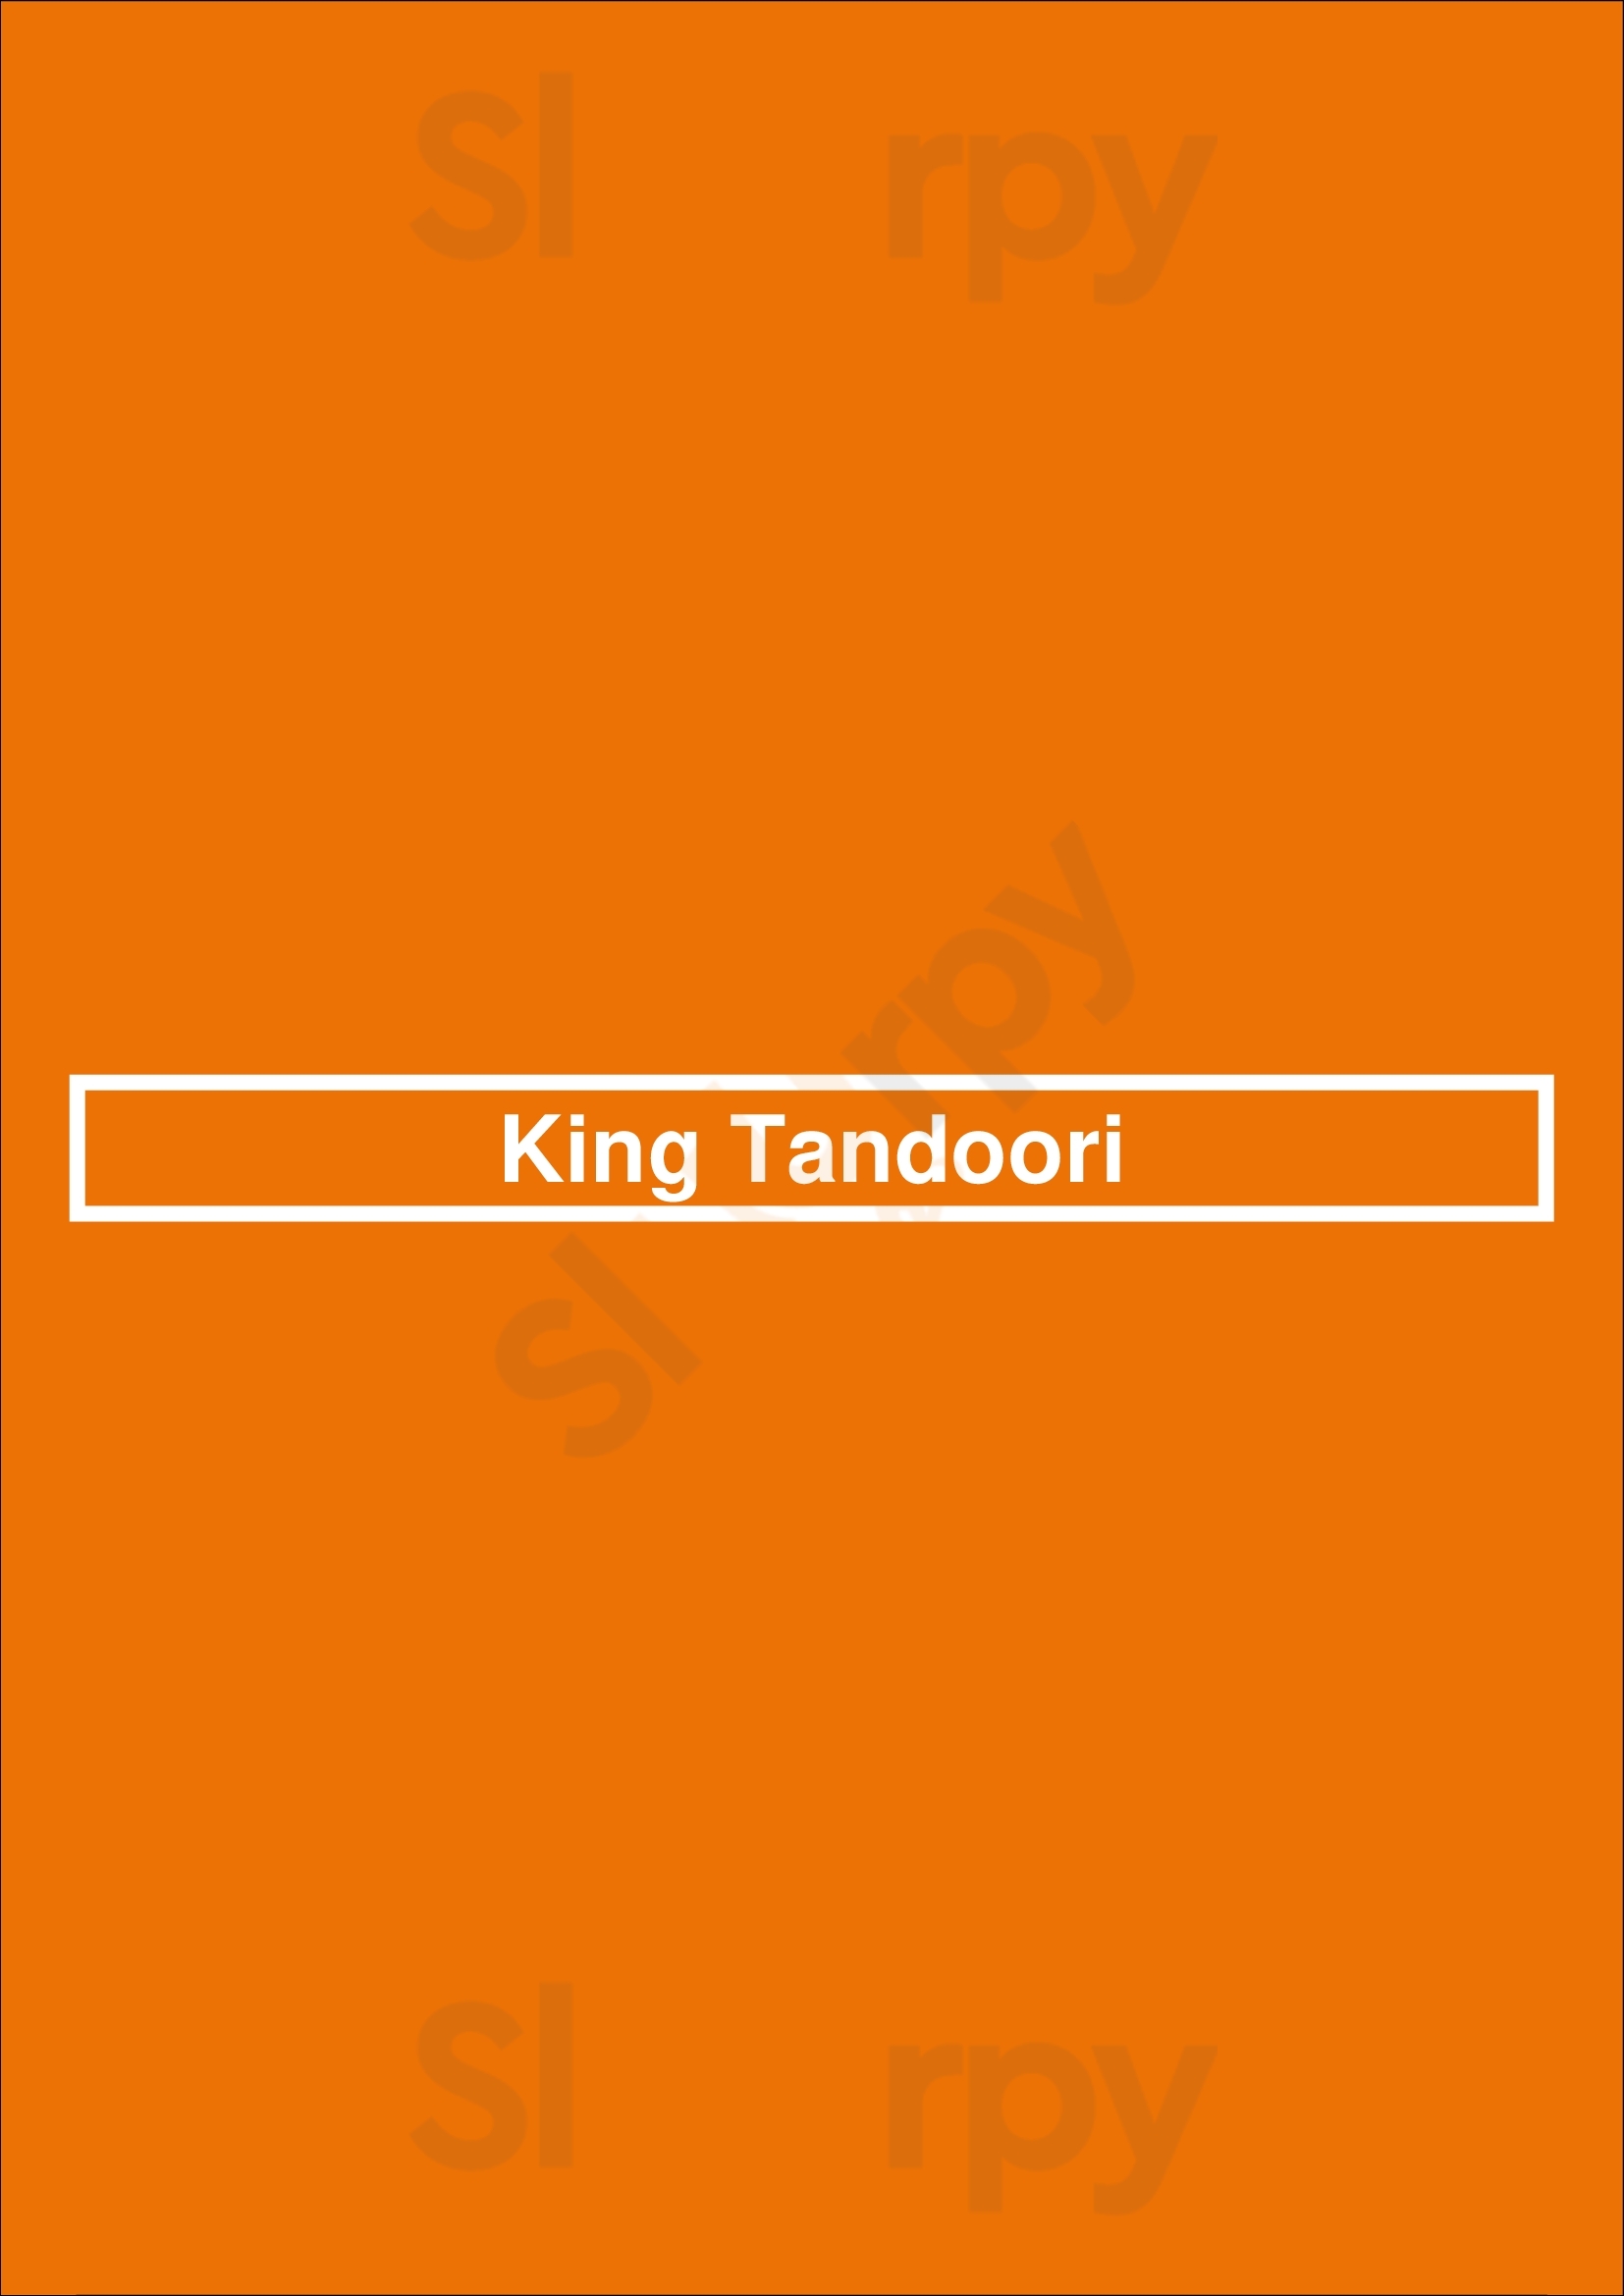 King Tandoori Brampton Menu - 1